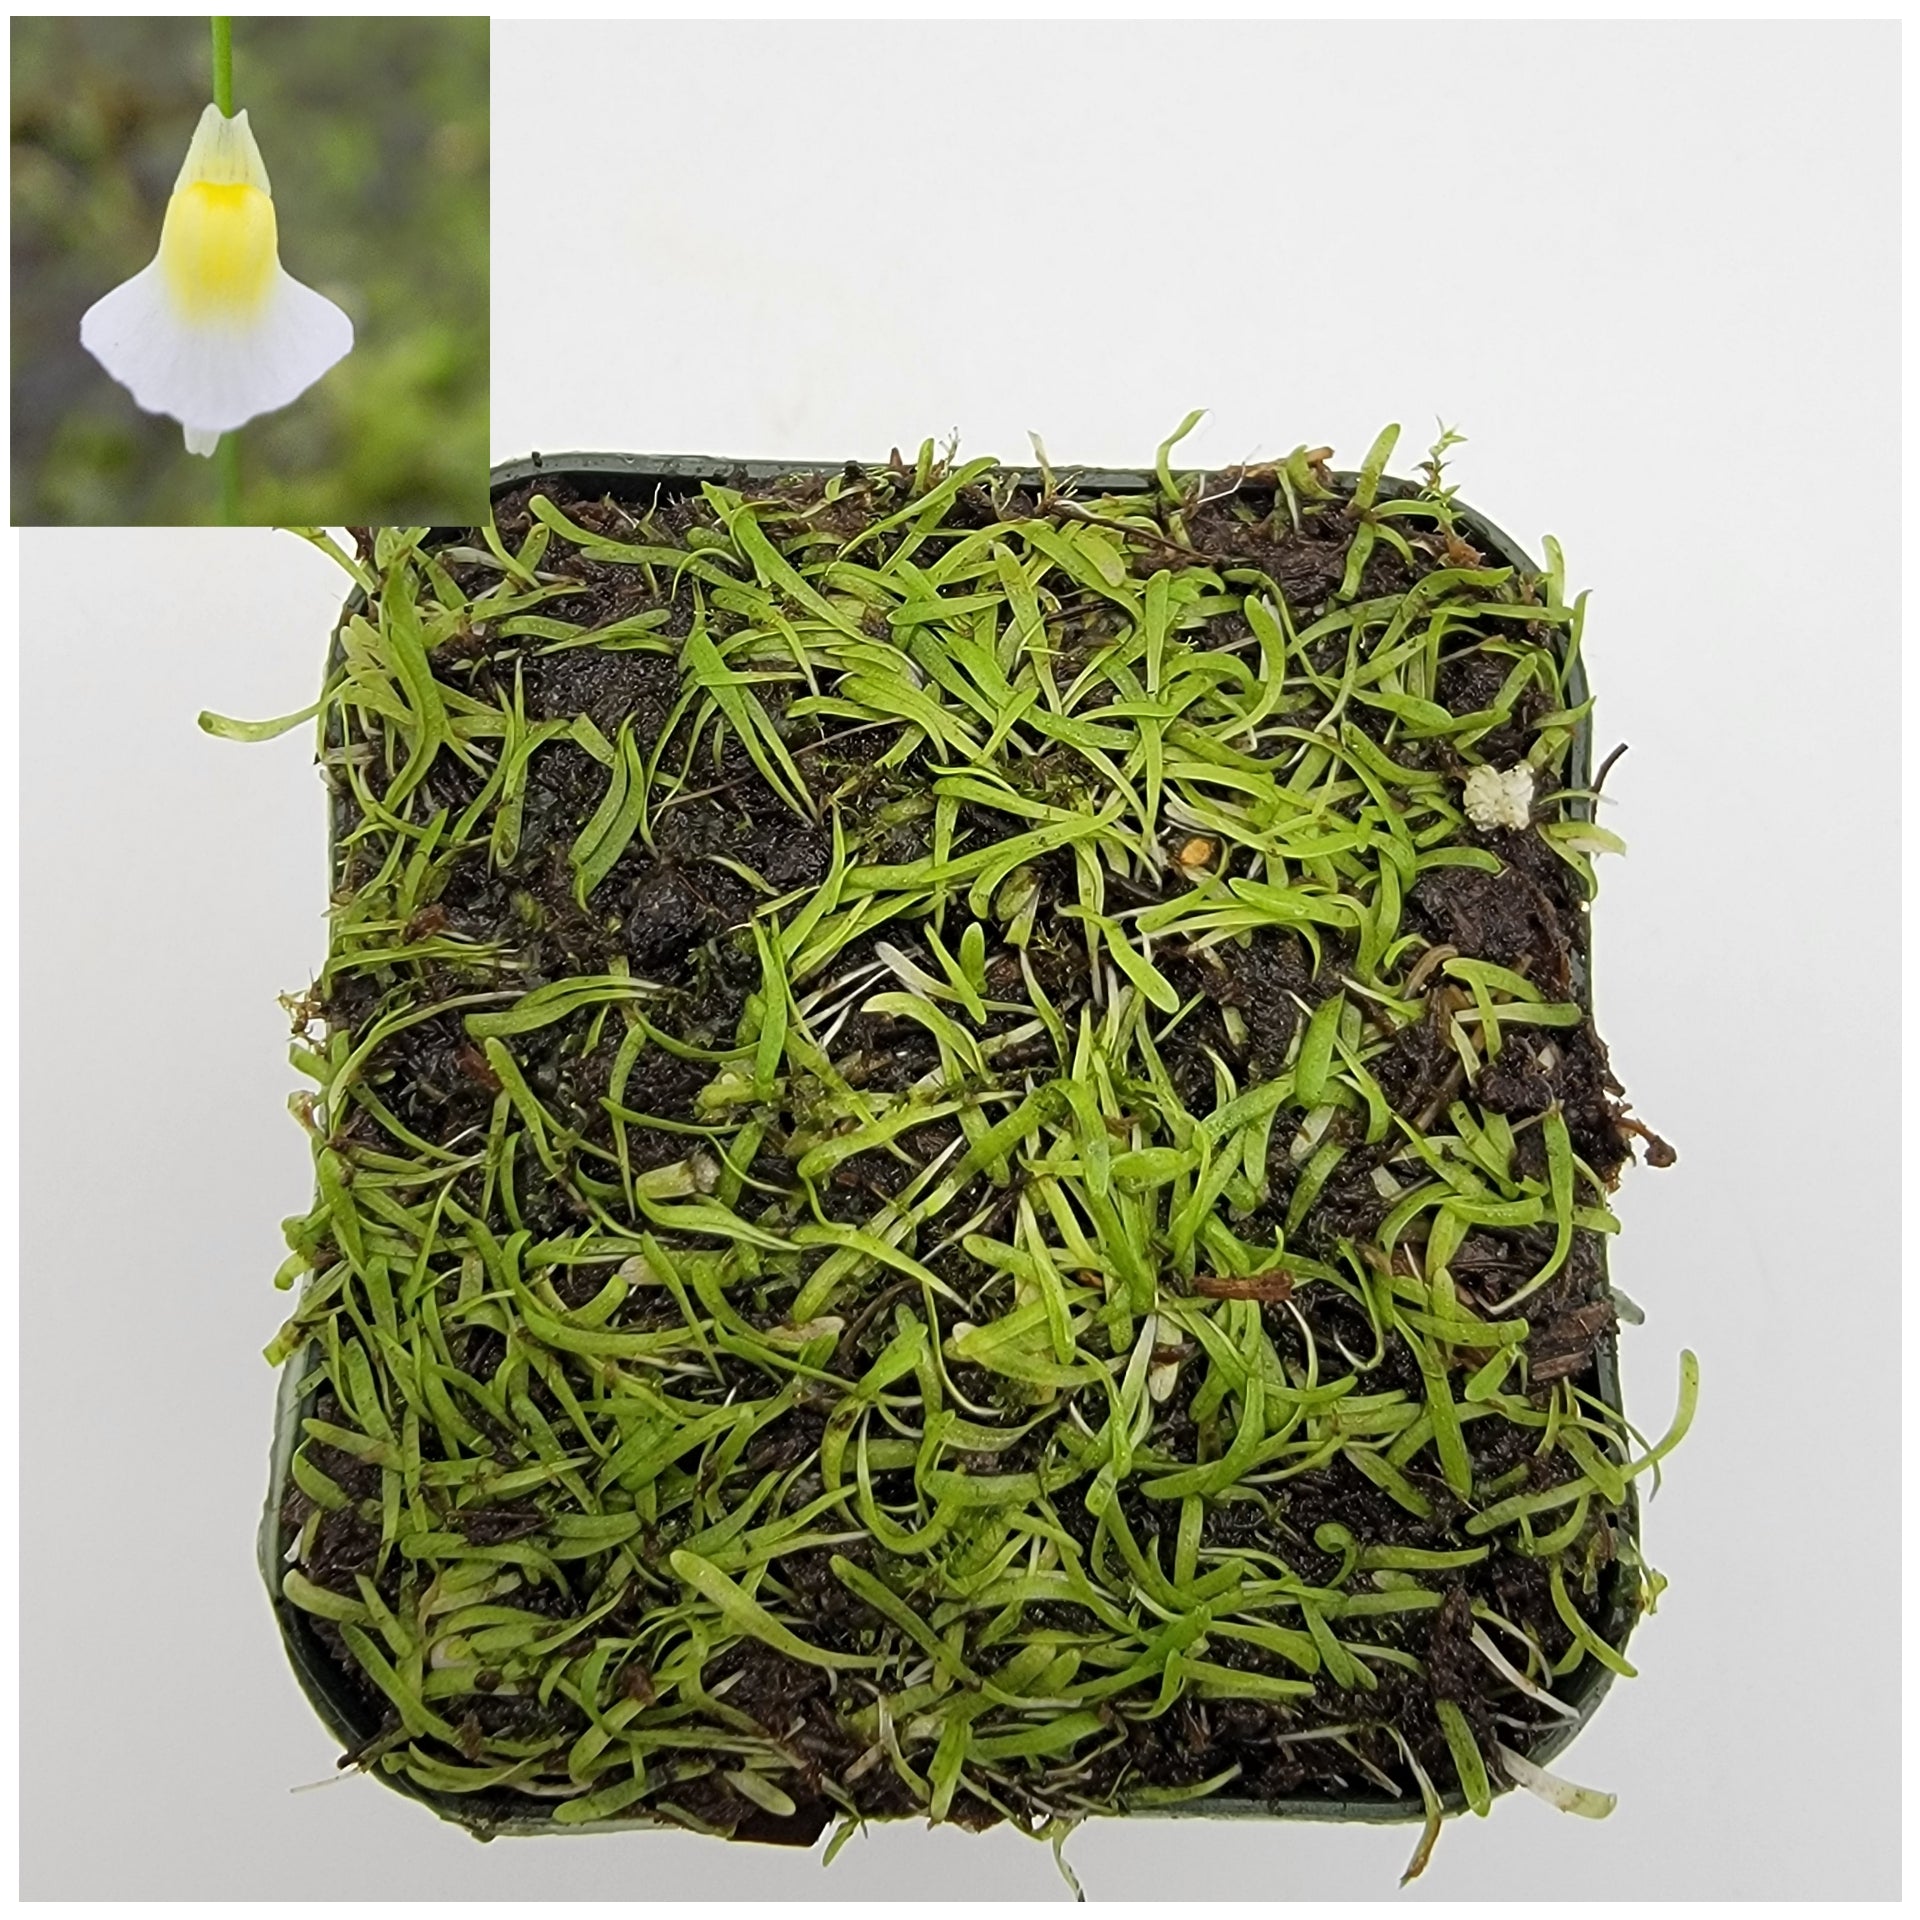 Utricularia bisquamata (1" plug) -Live carnivorous plant- - Rainbow Carnivorous Plants LLC